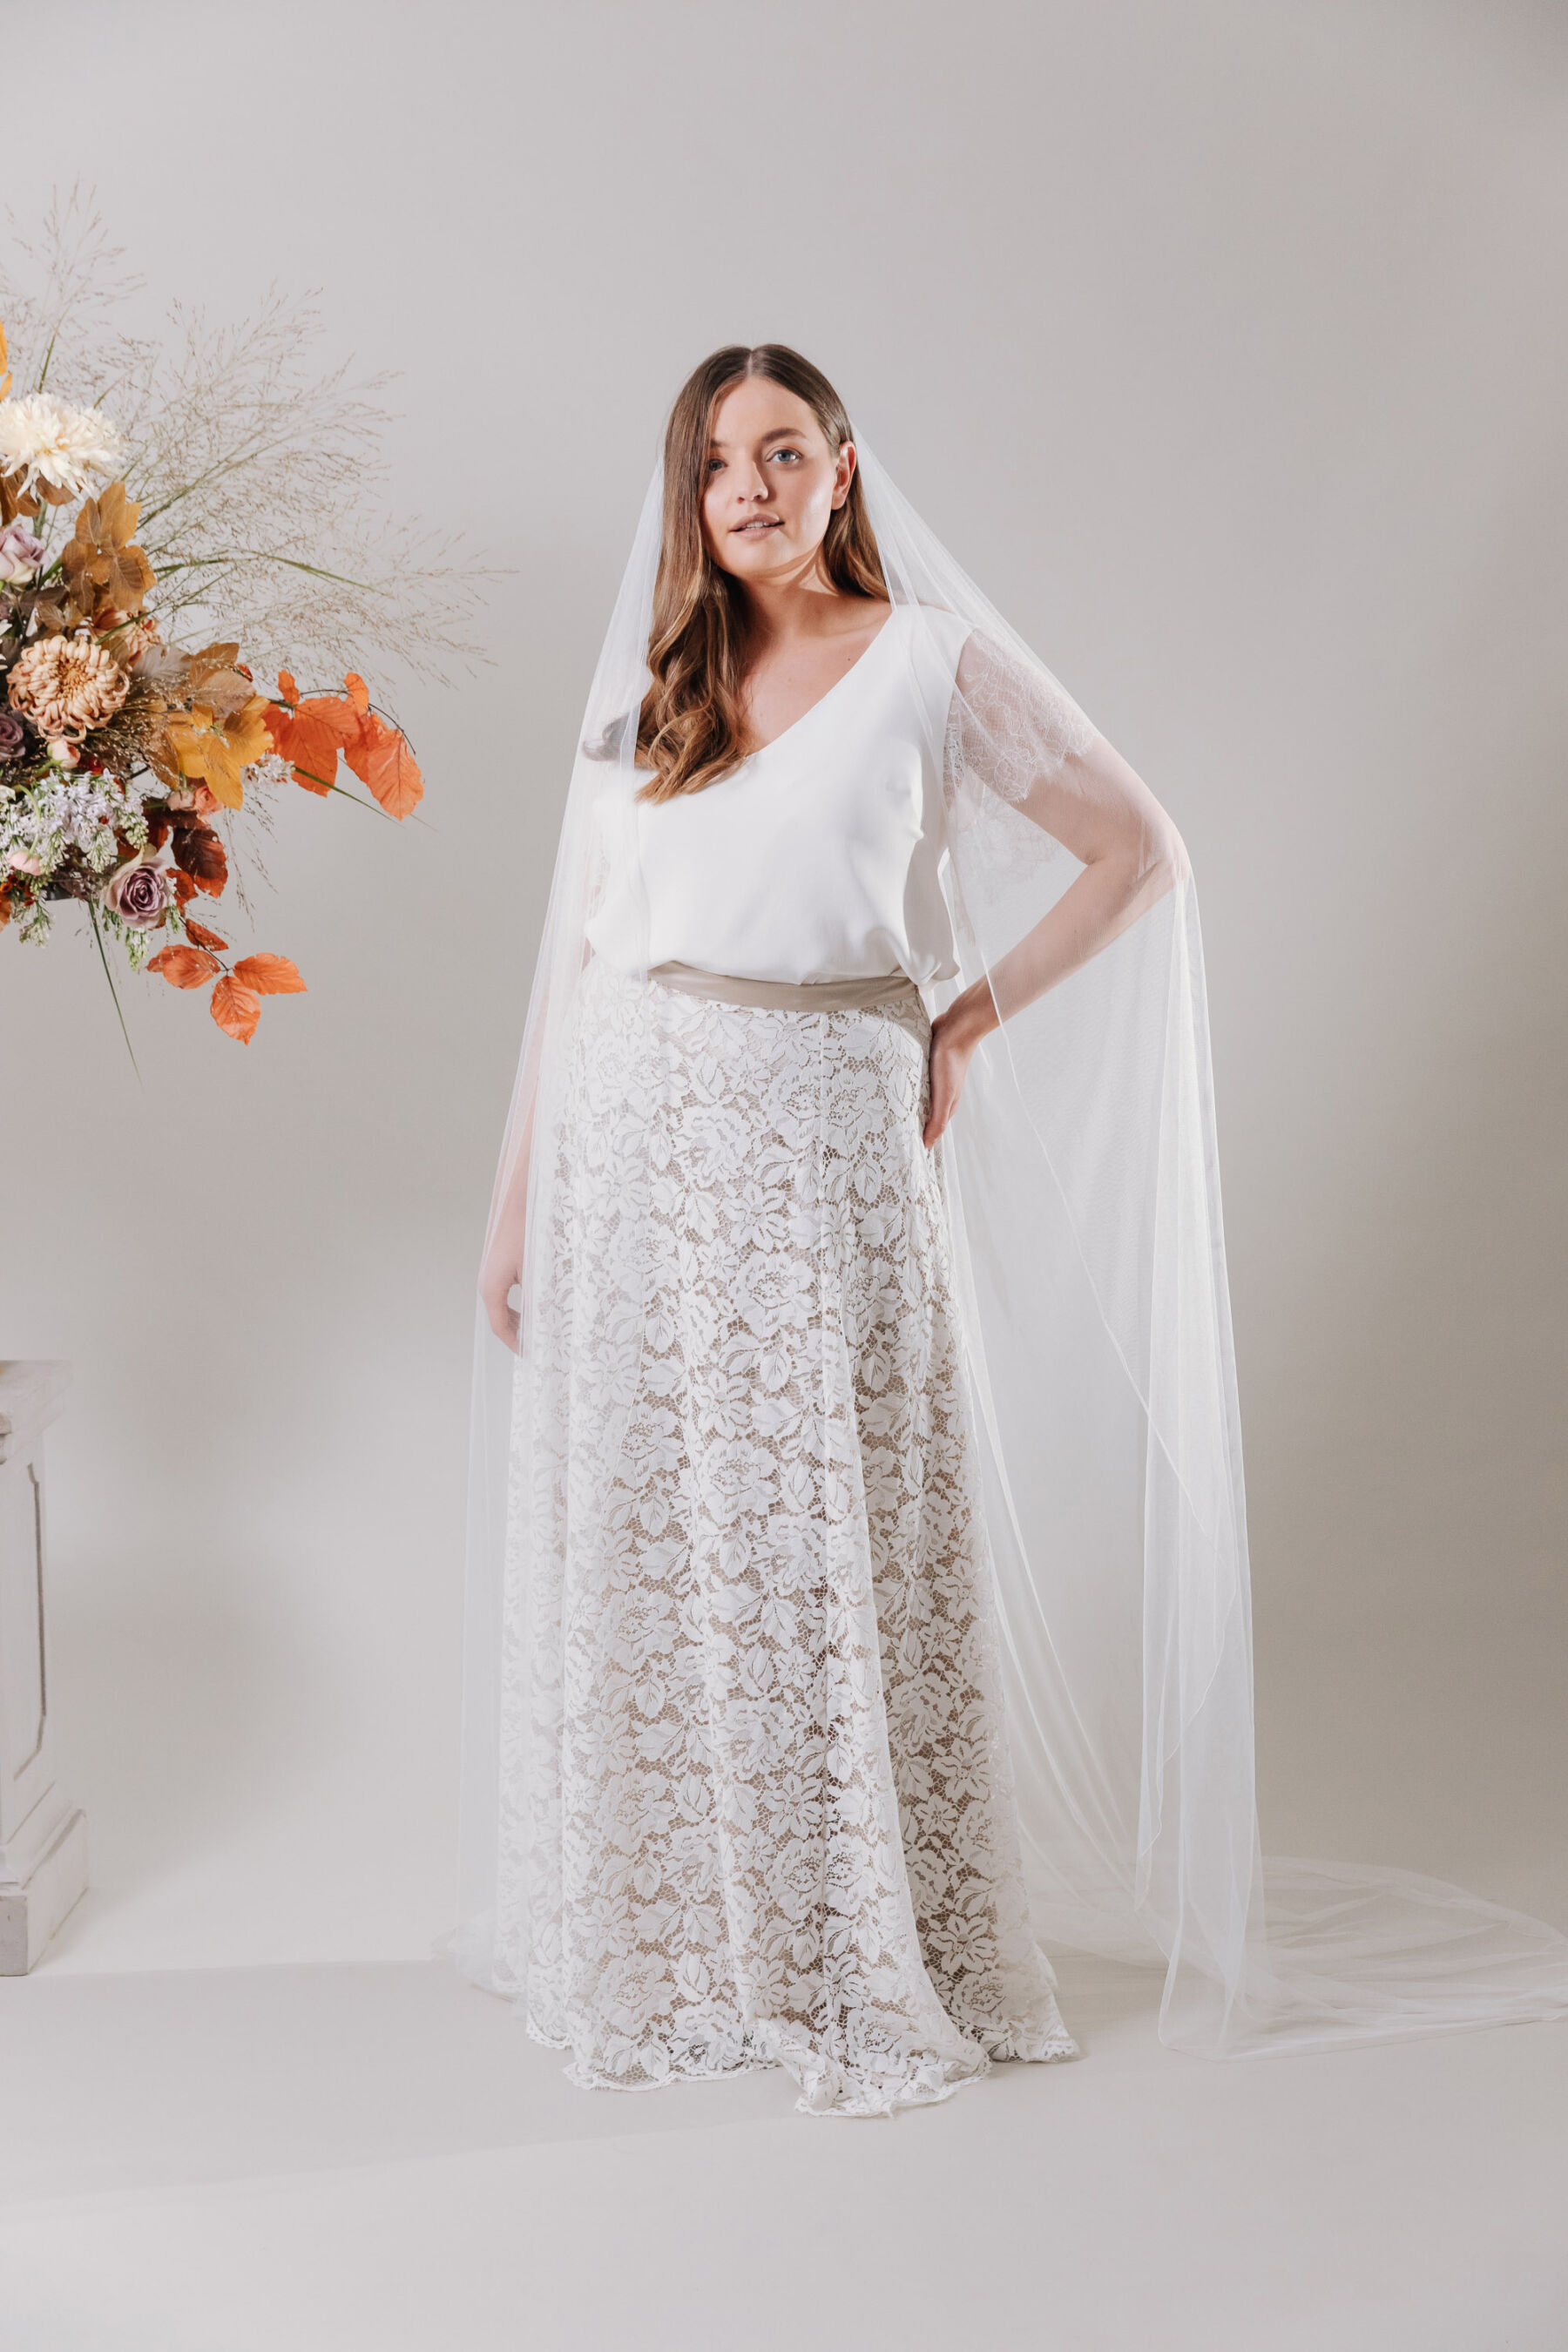 Kate Beaumont wedding dress design for fuller figured women & curvy brides